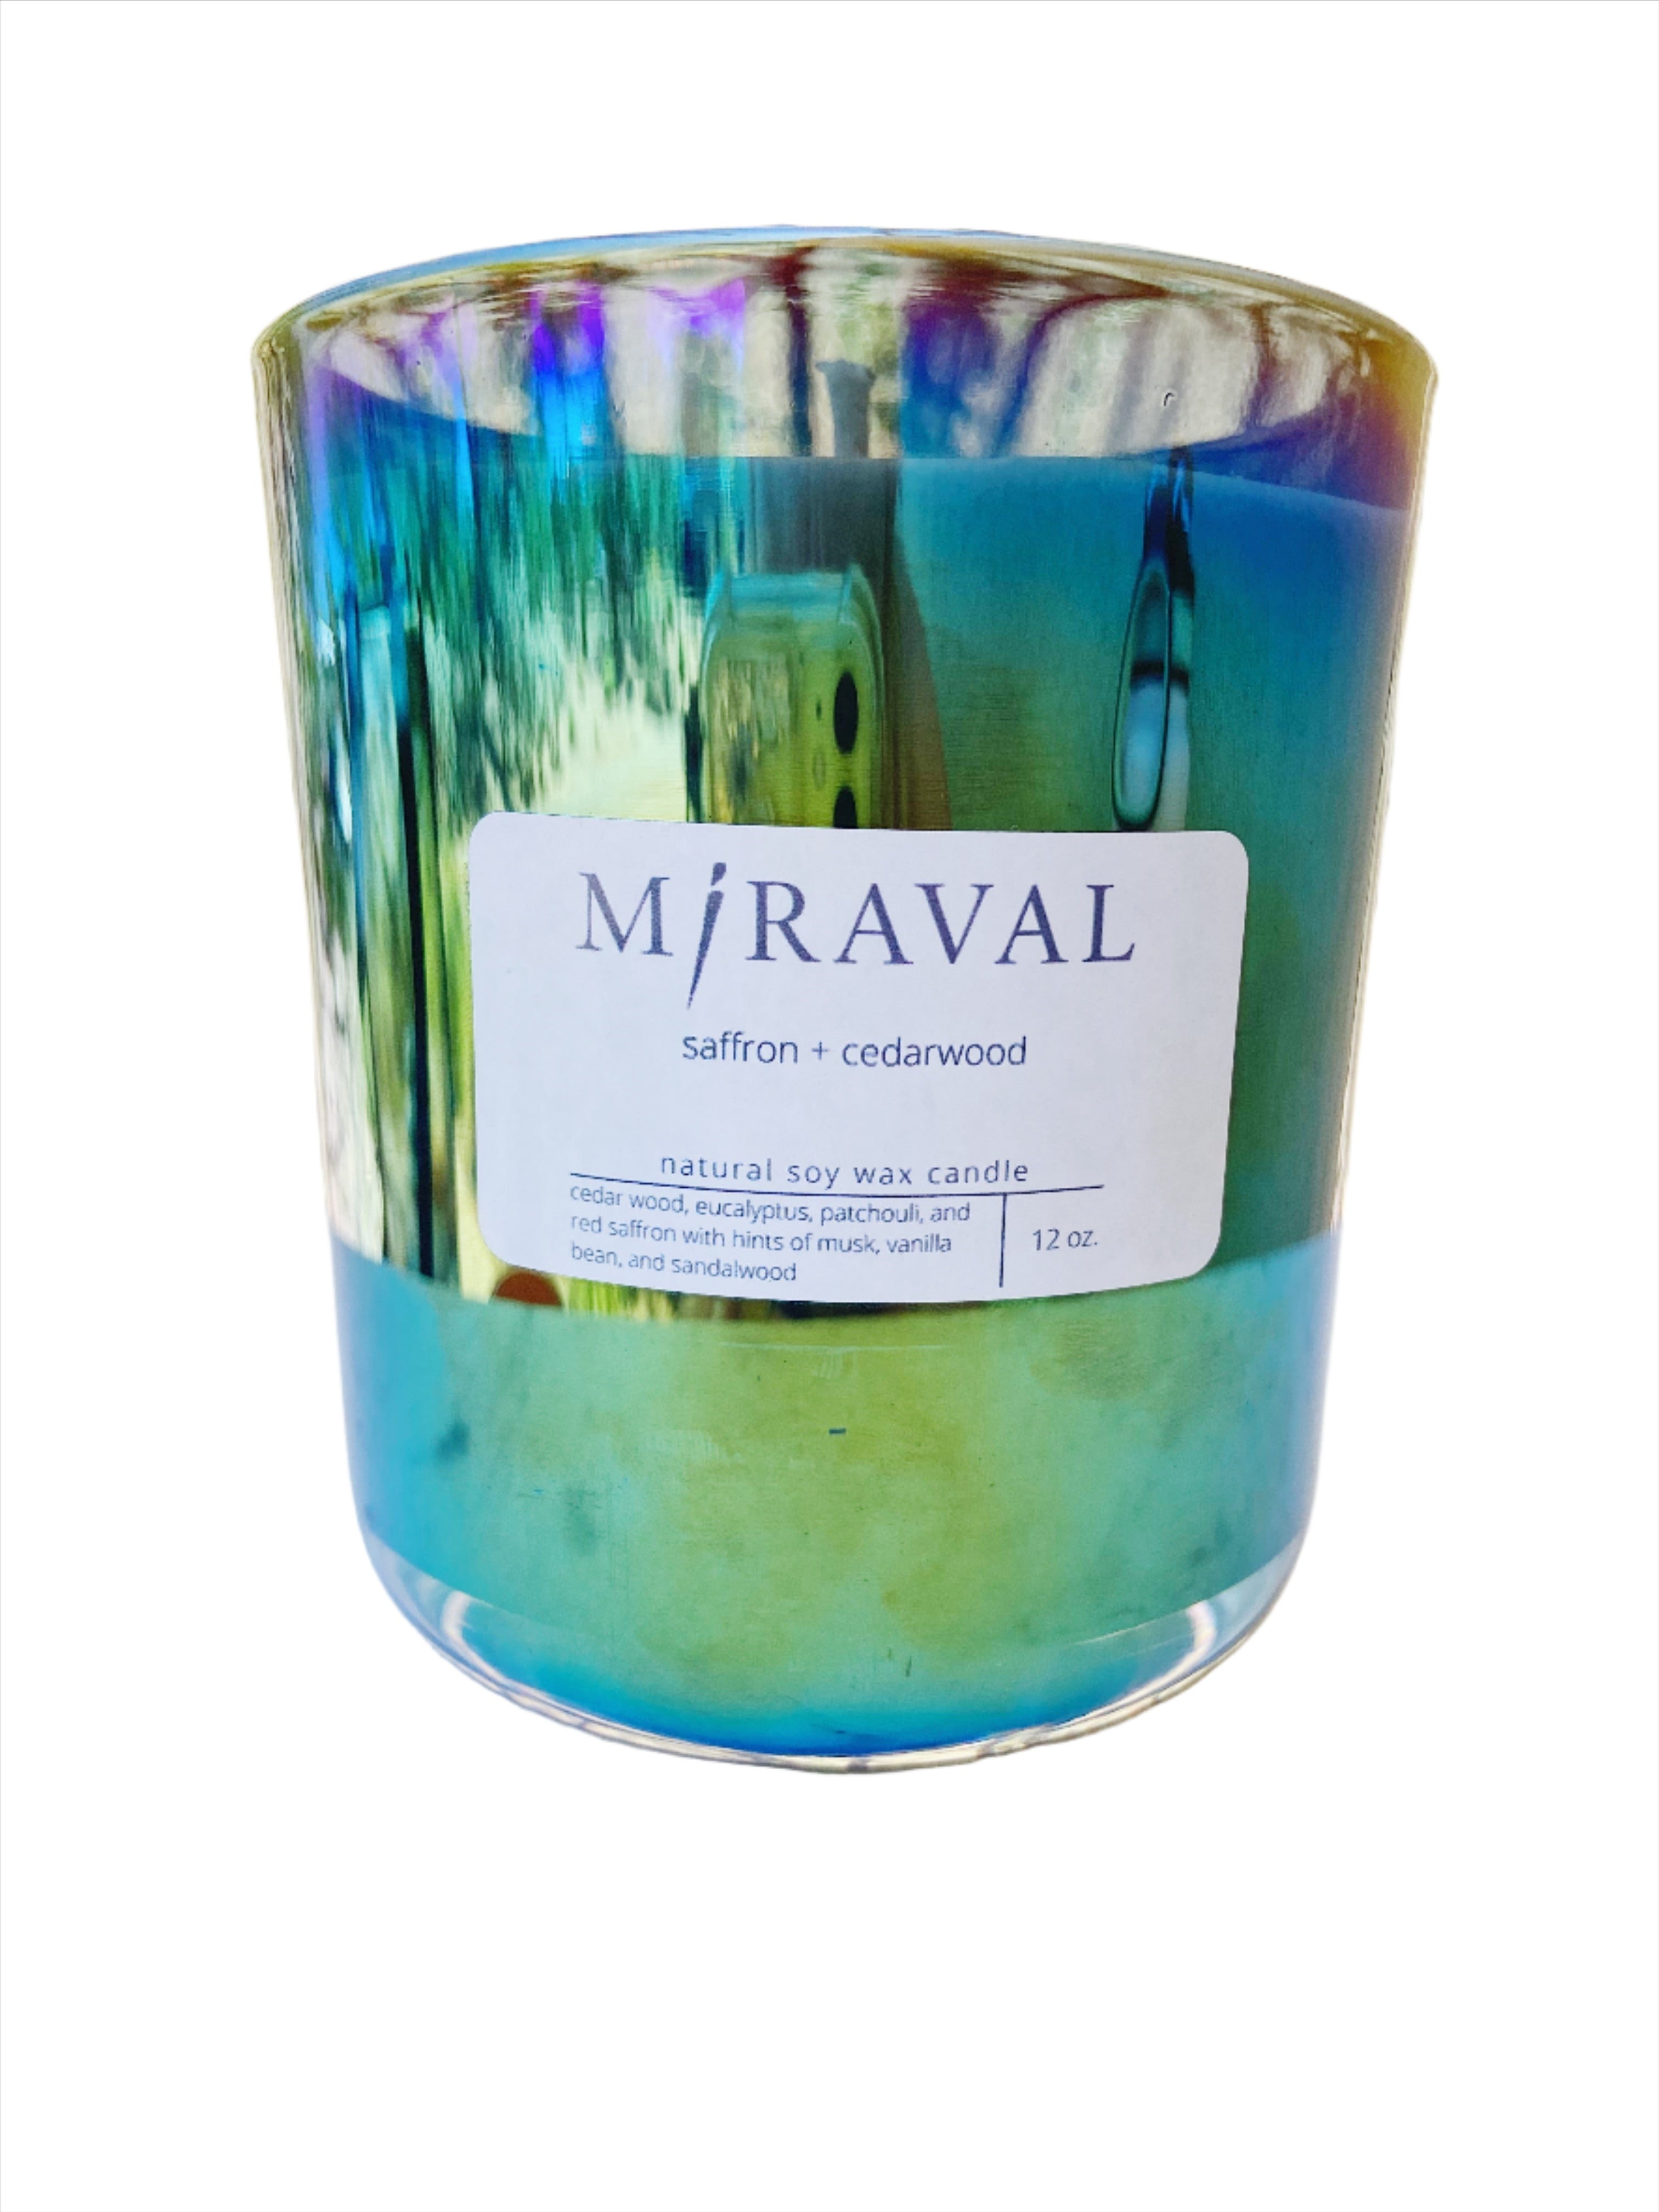 Miraval Candle - Saffron + Cedarwood